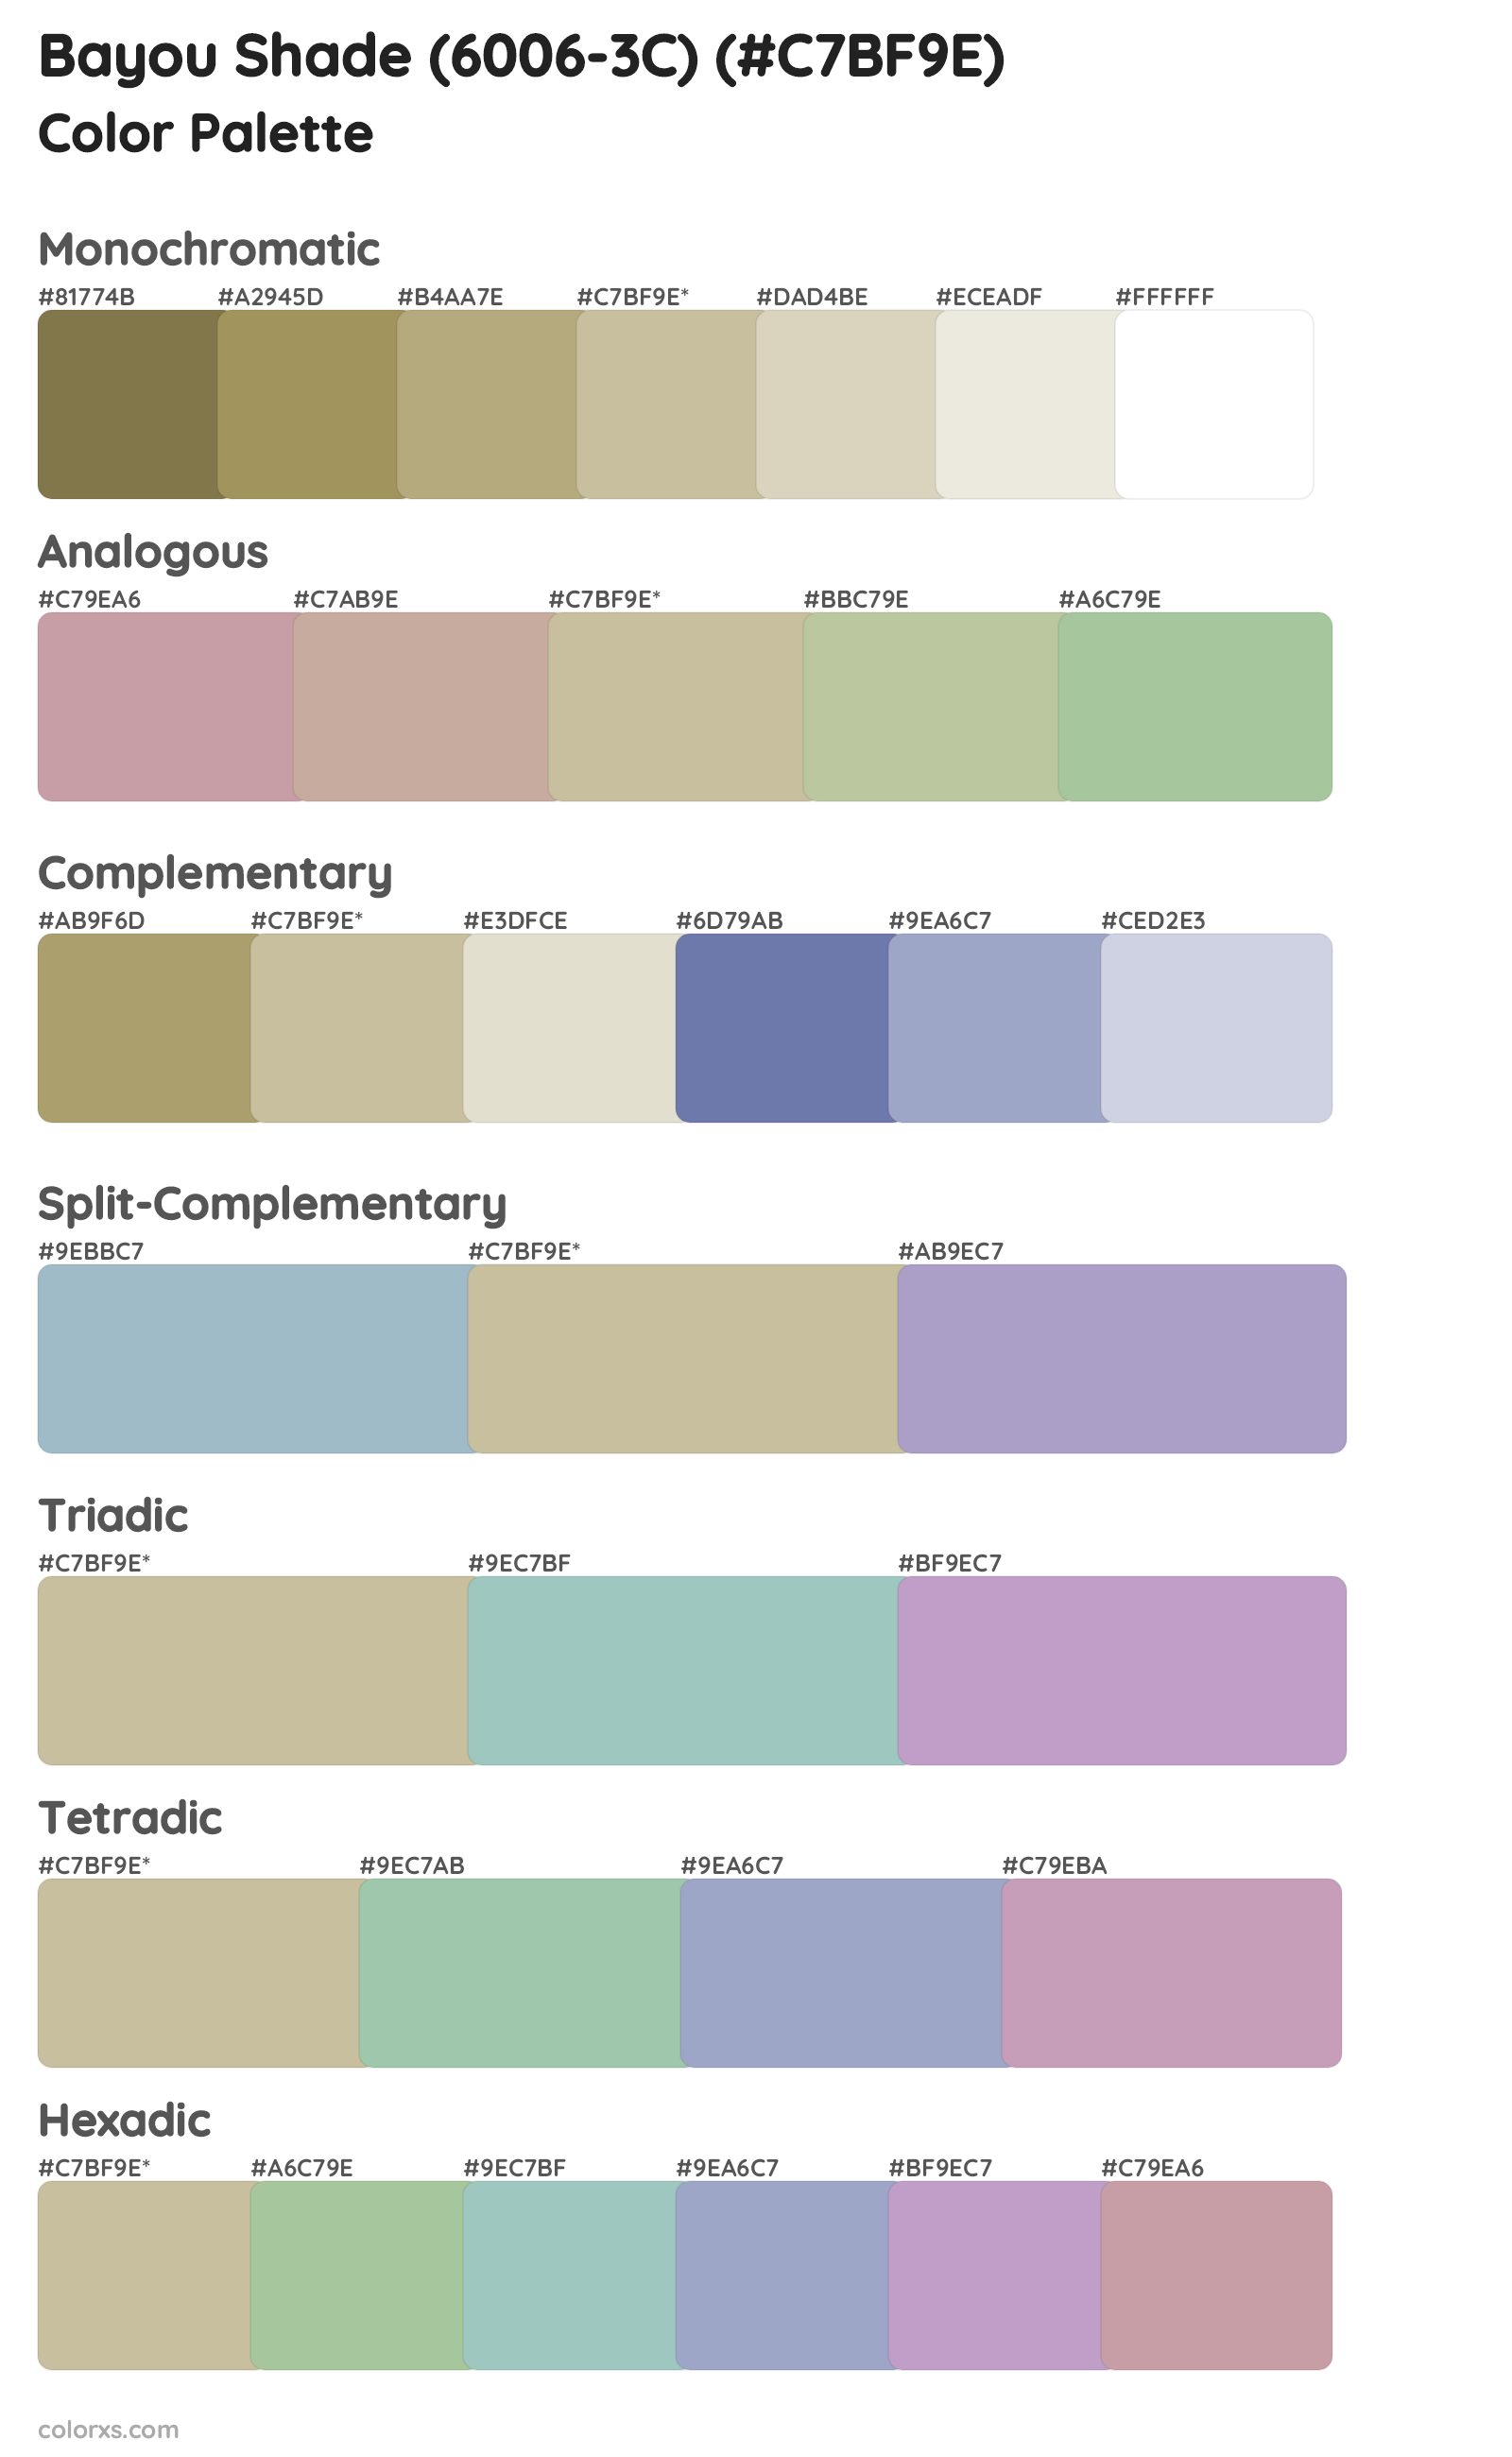 Bayou Shade (6006-3C) Color Scheme Palettes